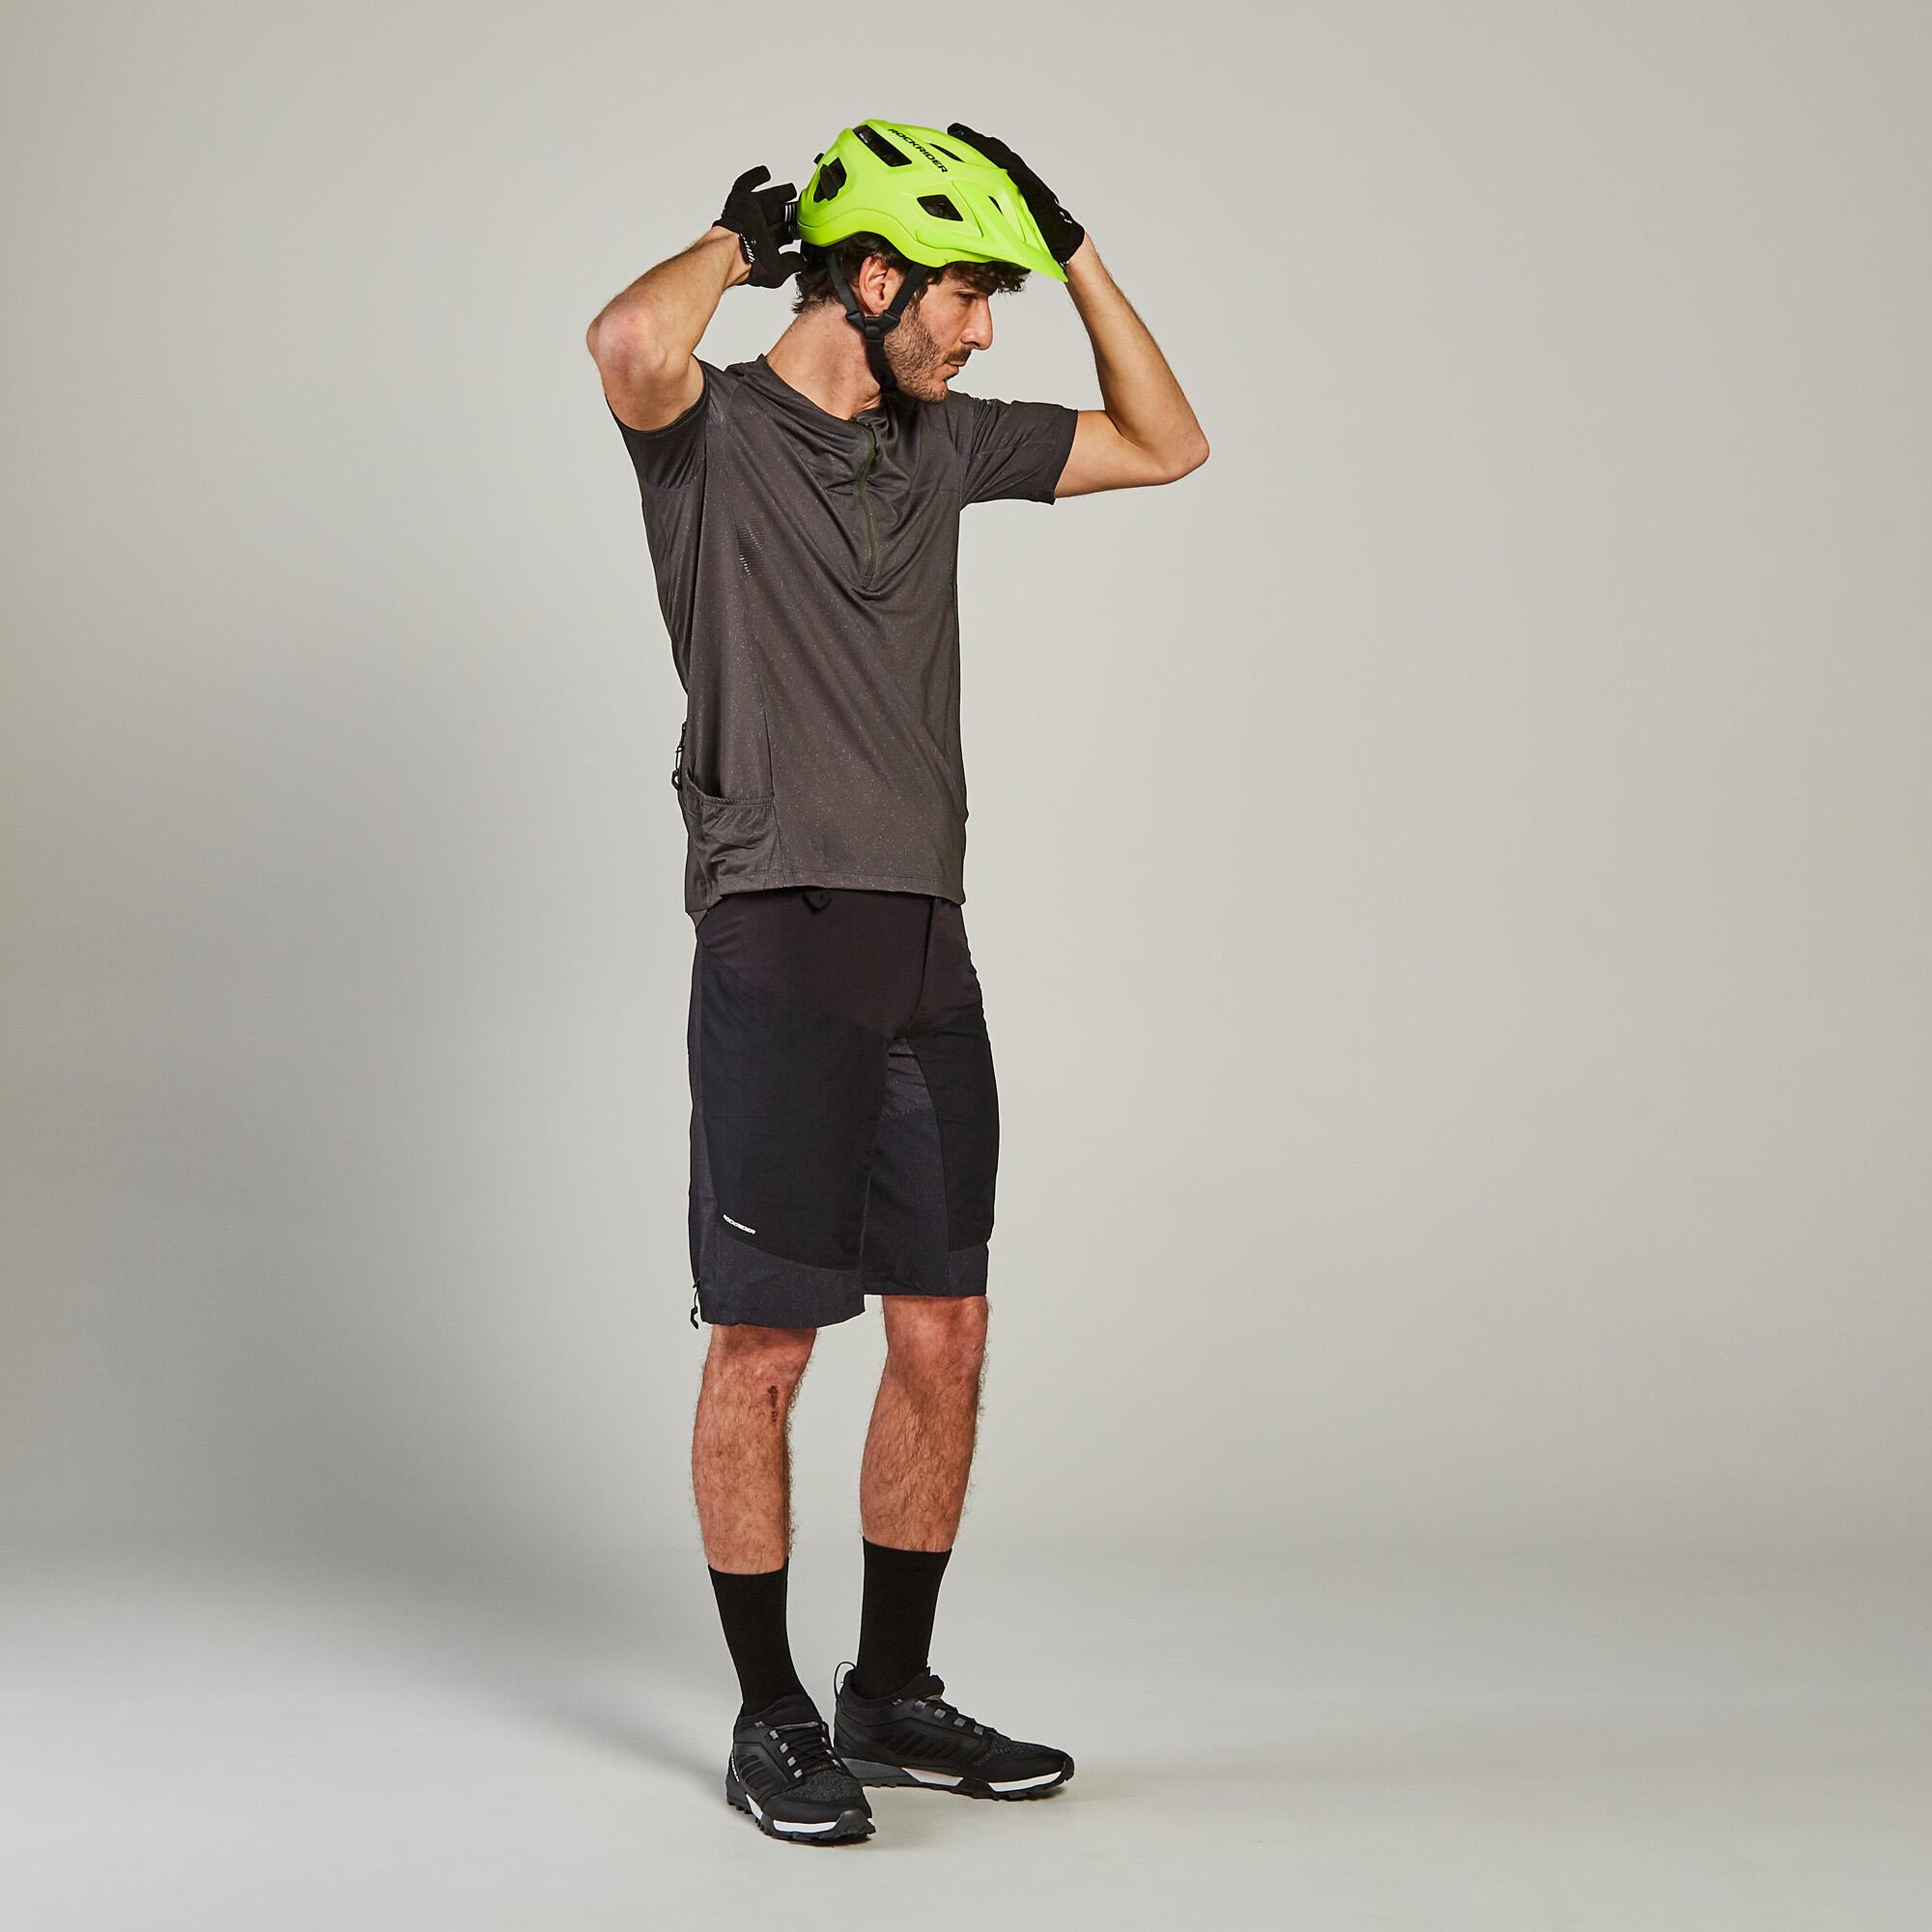 Mountain Biking Helmet EXPL 500 - Neon Yellow 5/18